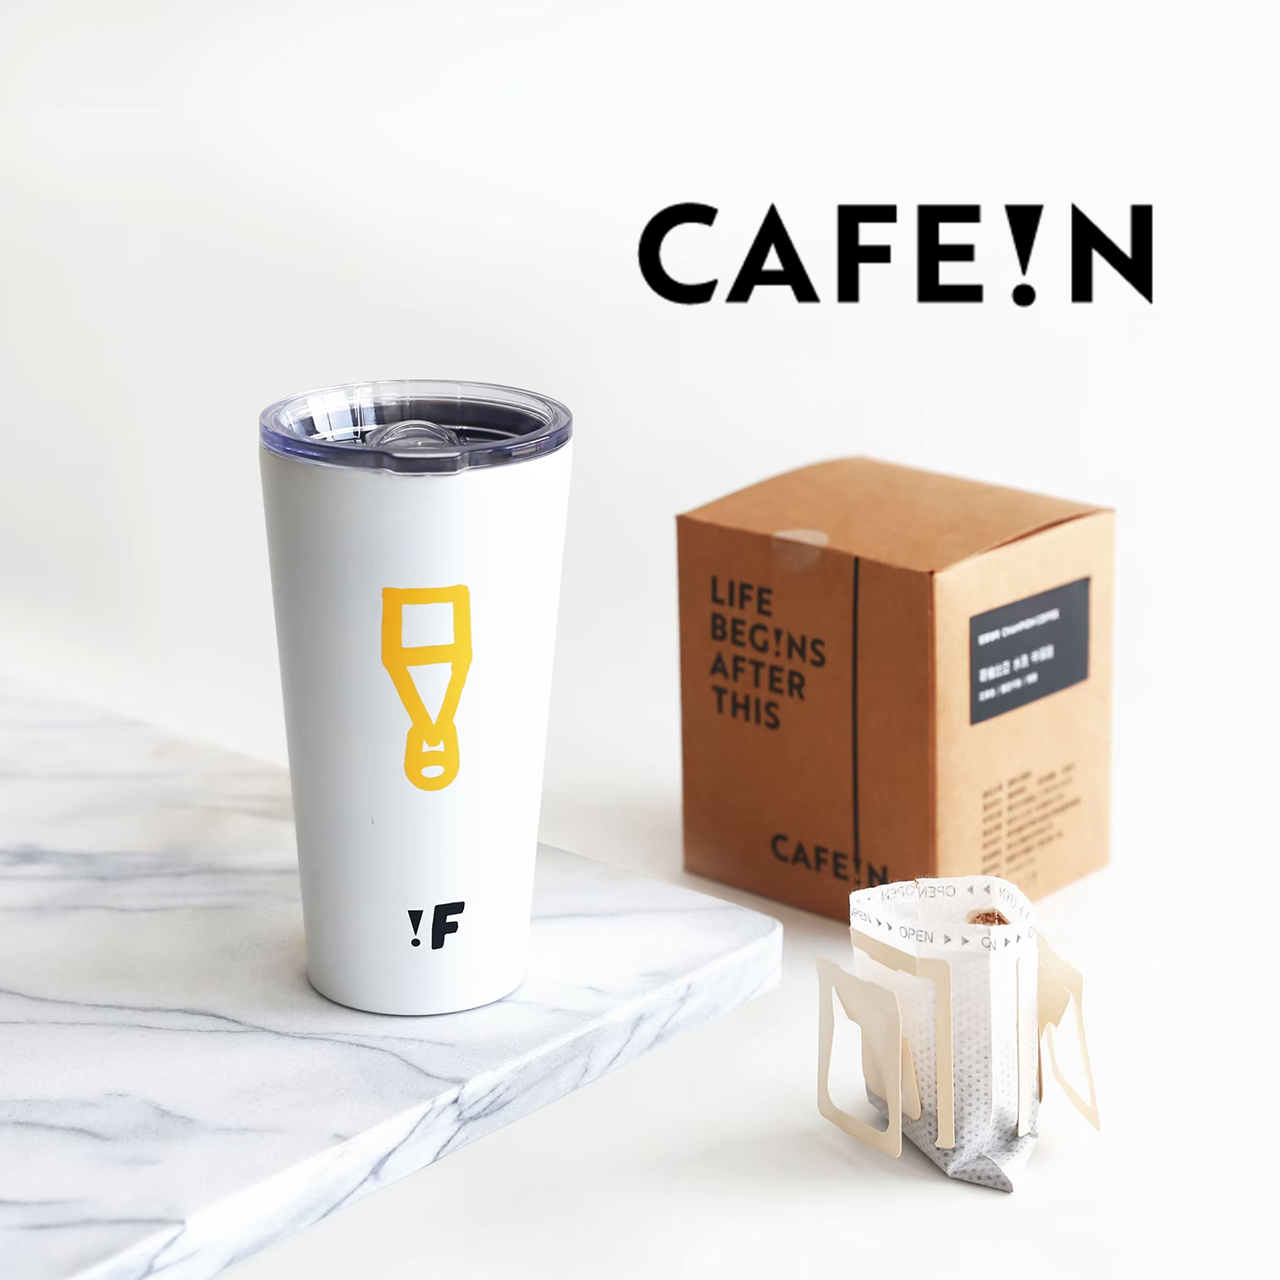 CAFE!N,生活選物,生活雜貨,咖啡,咖啡品牌